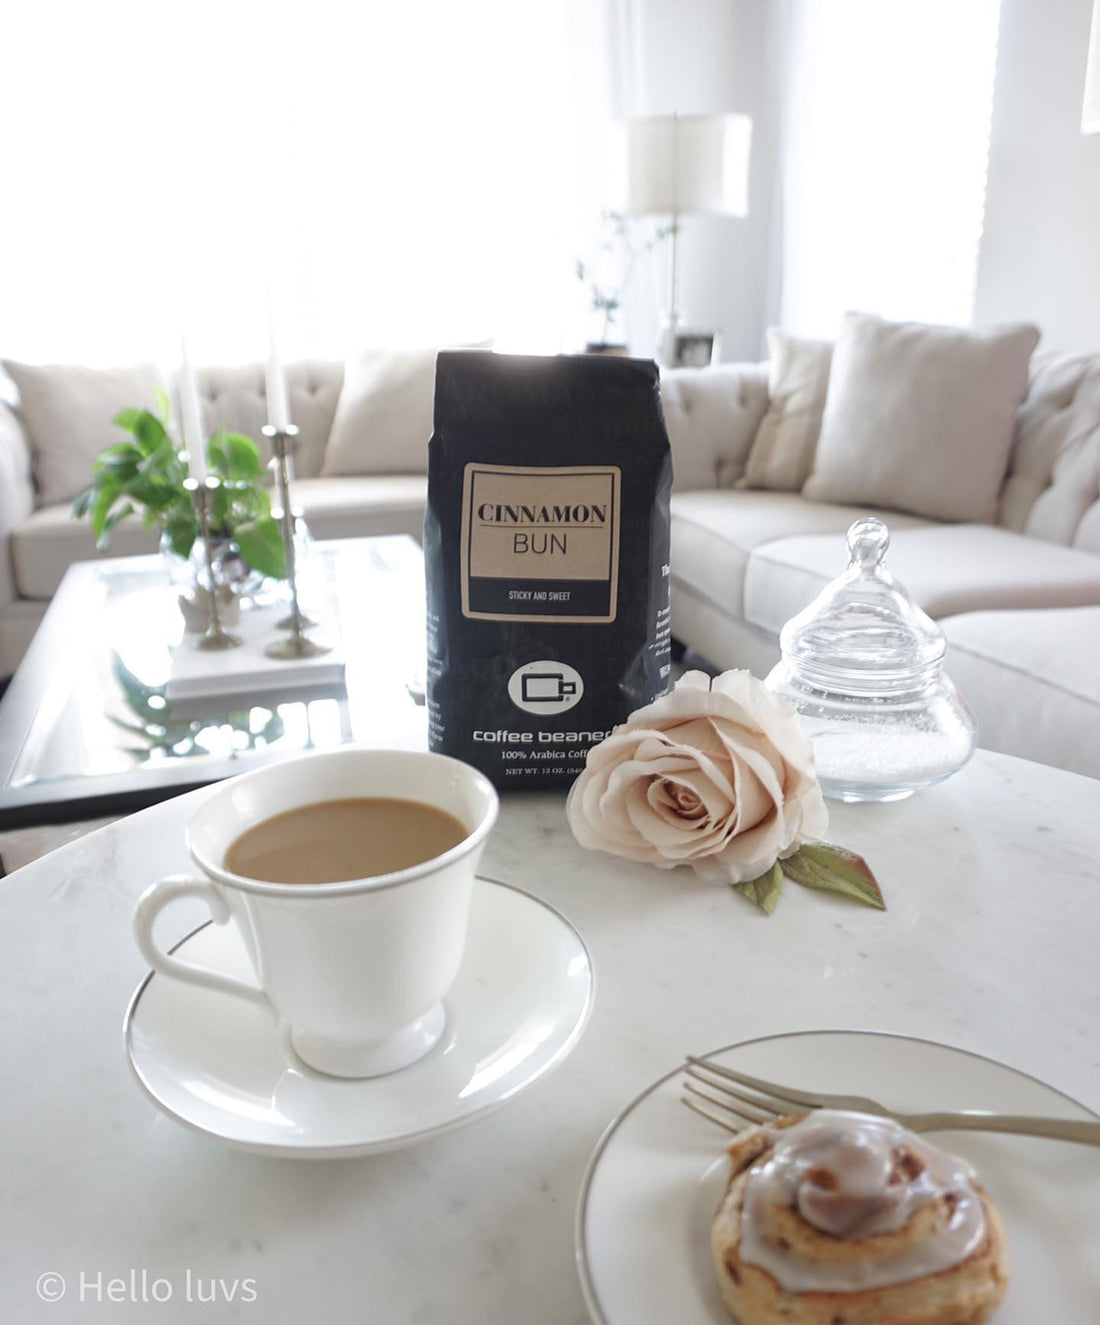 Cinnamon Bun Flavored Coffee: A Cup of Mornings Twist!